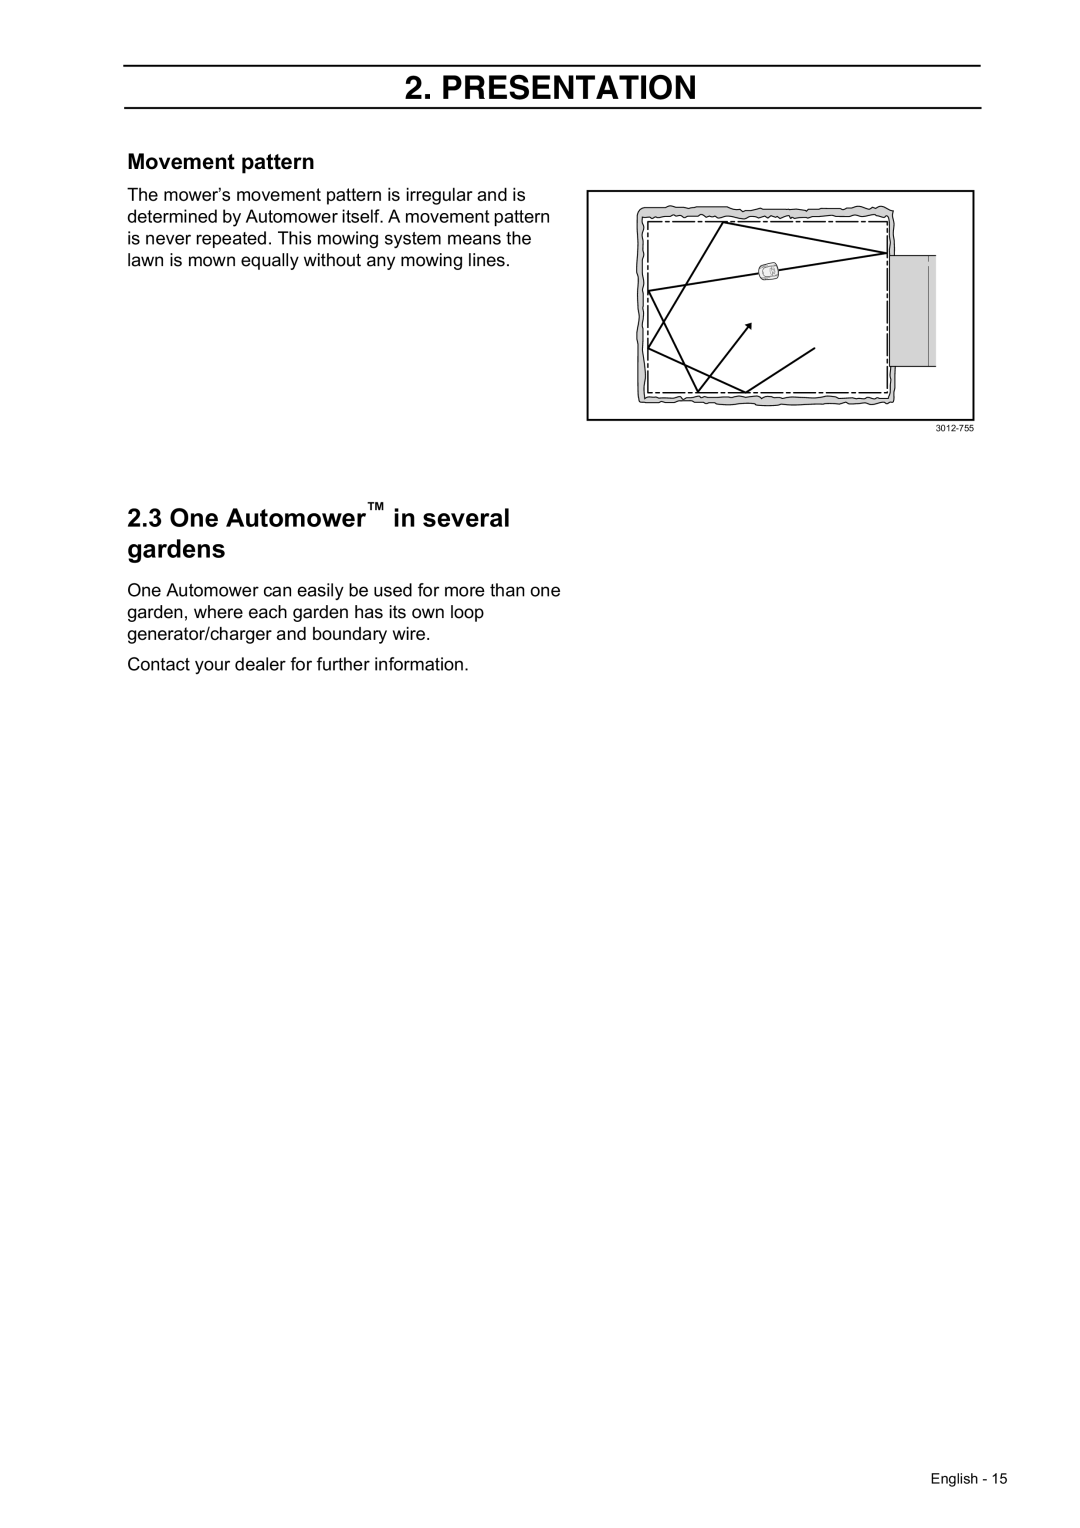 Husqvarna 210 C manual One Automower in several gardens, Movement pattern, Presentation 